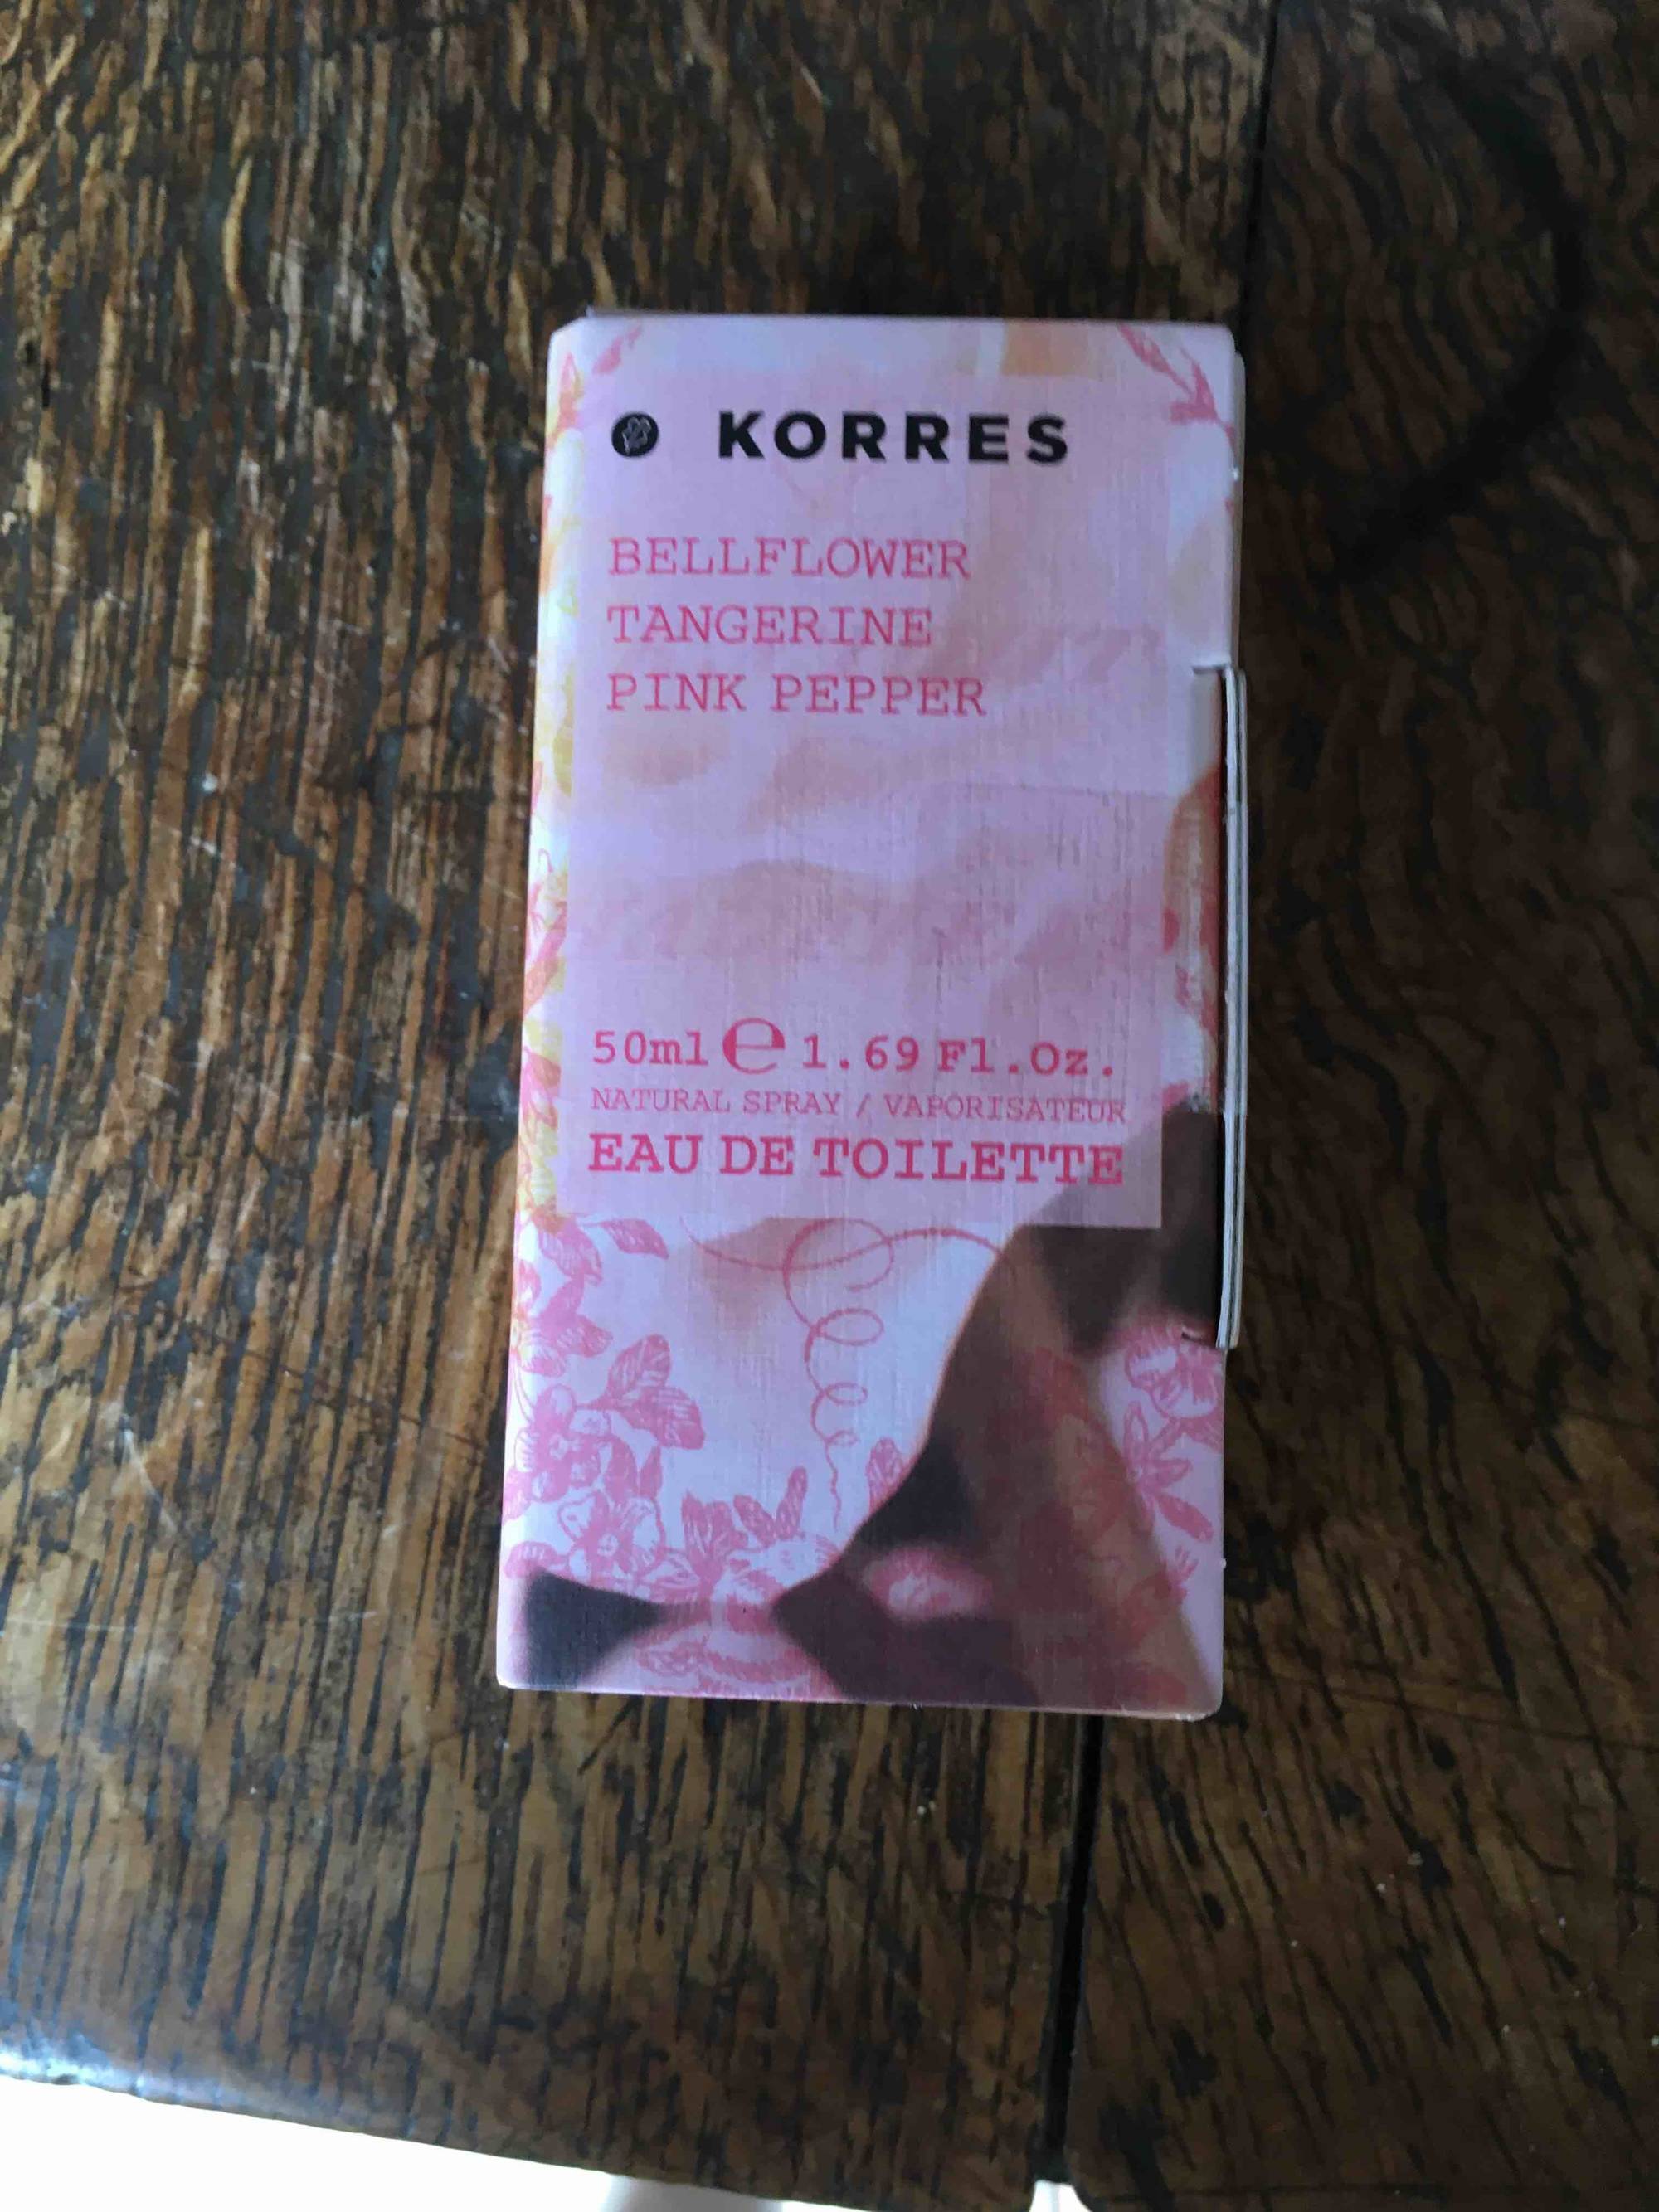 KORRES - Bellflower tangerine pink pepper - Eau de toilette